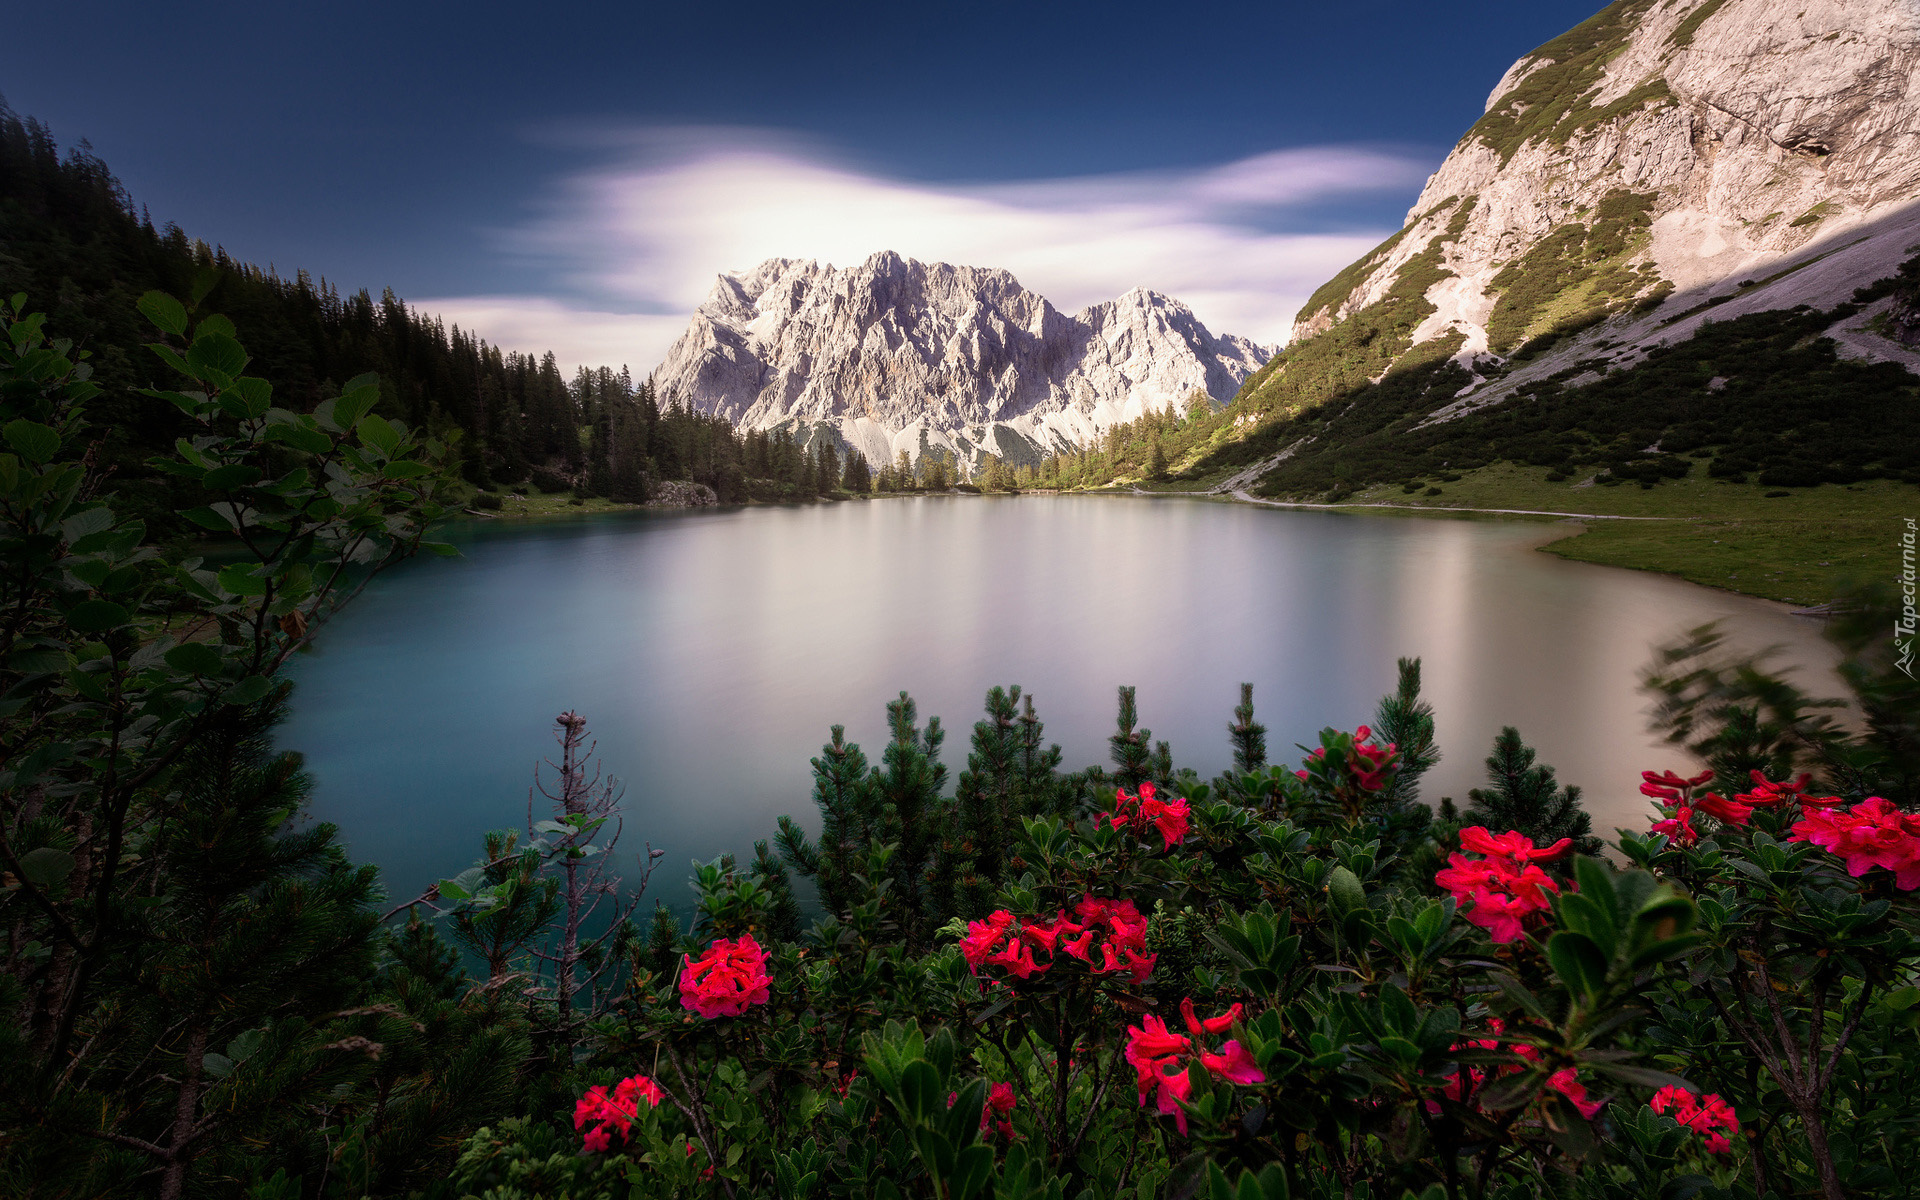 Jezioro Sebensee, Góry, Alpy, Pasmo Mieming, Kwiaty, Tyrol, Austria